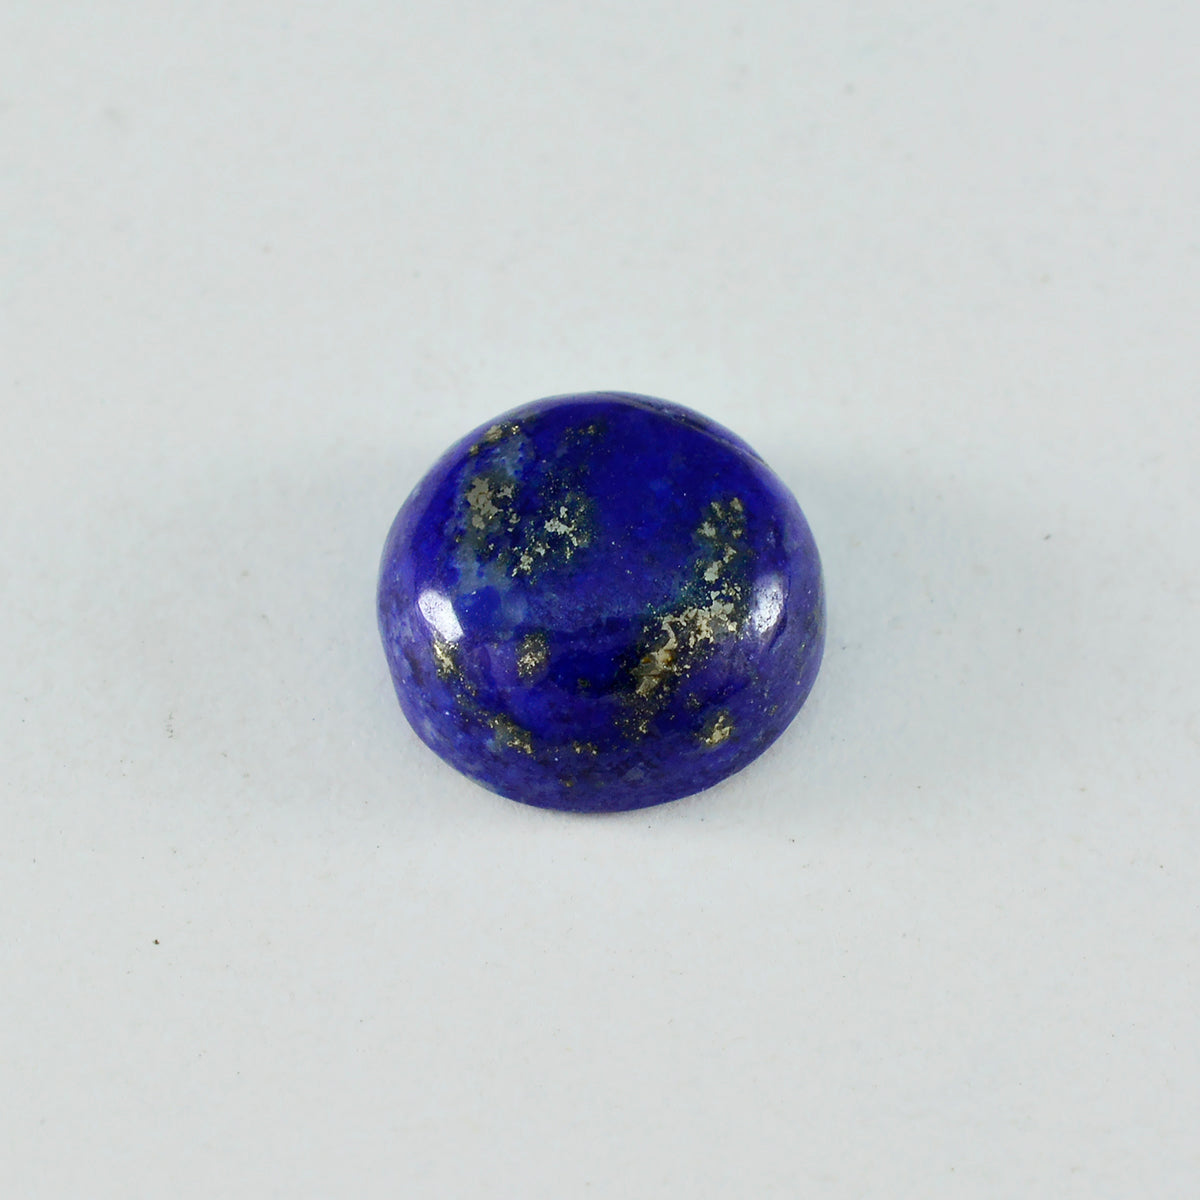 Riyogems 1PC Blue Lapis Lazuli Cabochon 13x13 mm Round Shape fantastic Quality Loose Gem